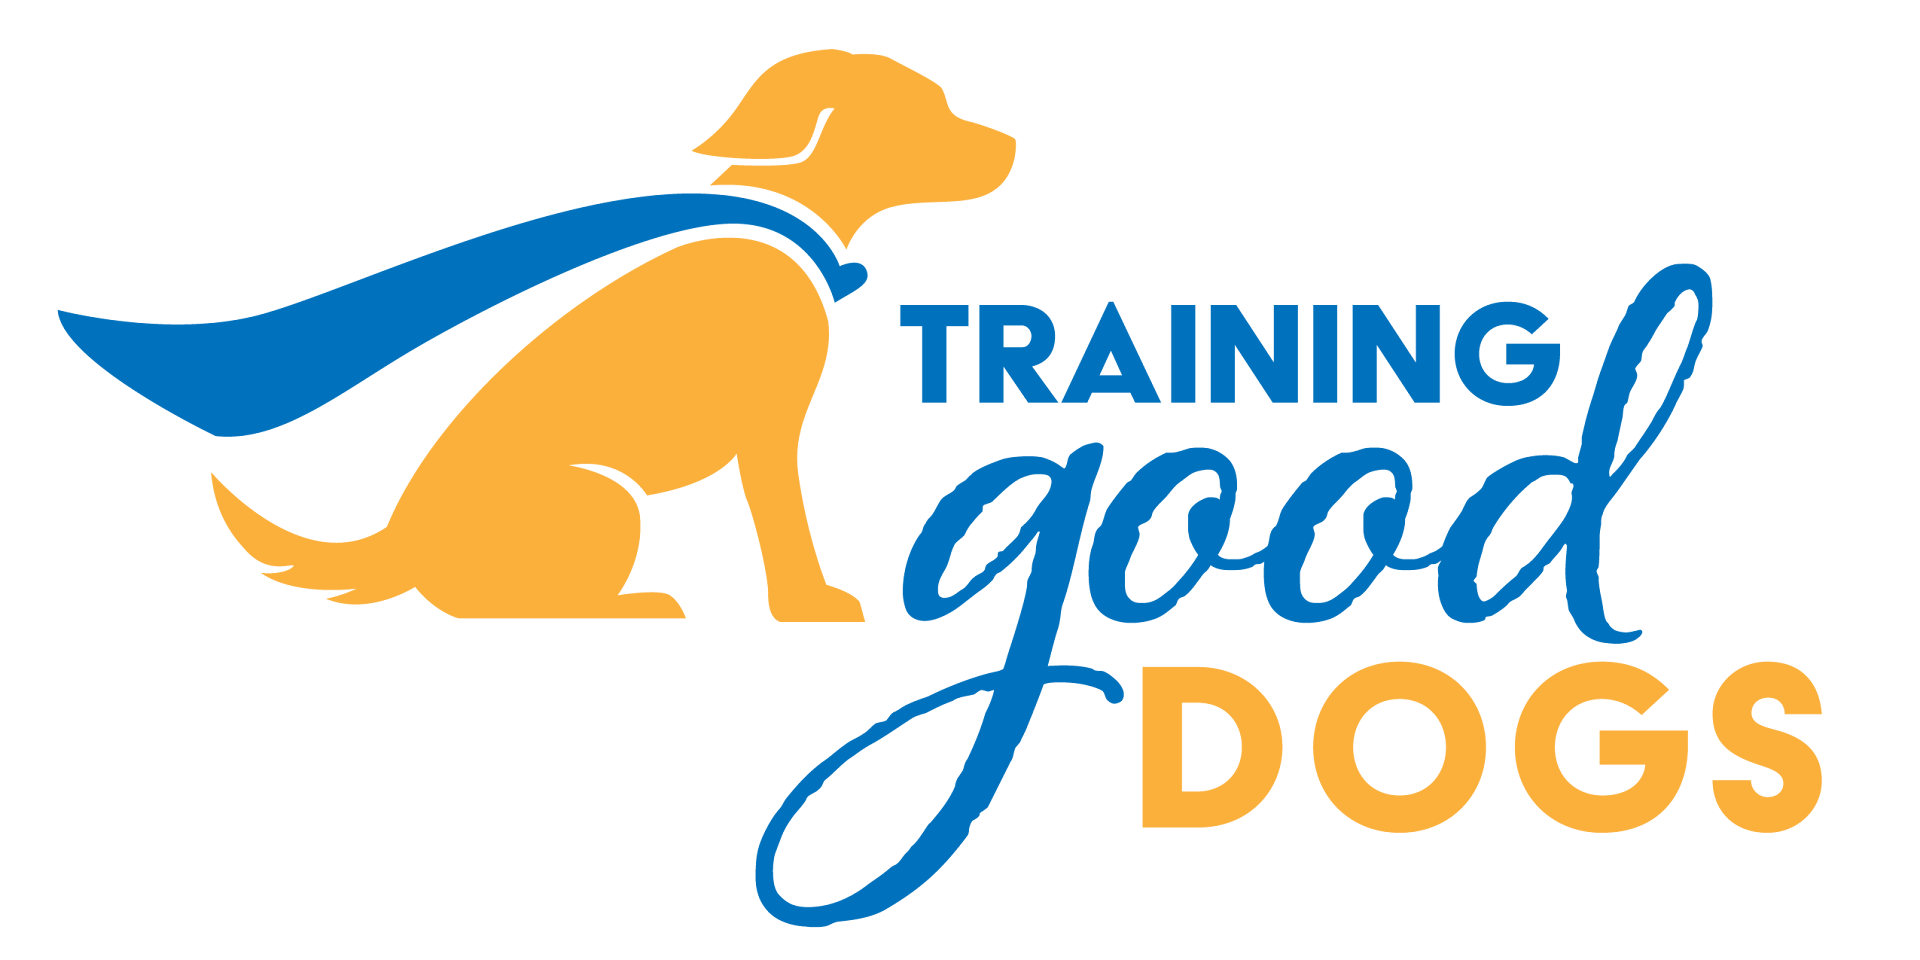 Training Good Dogs